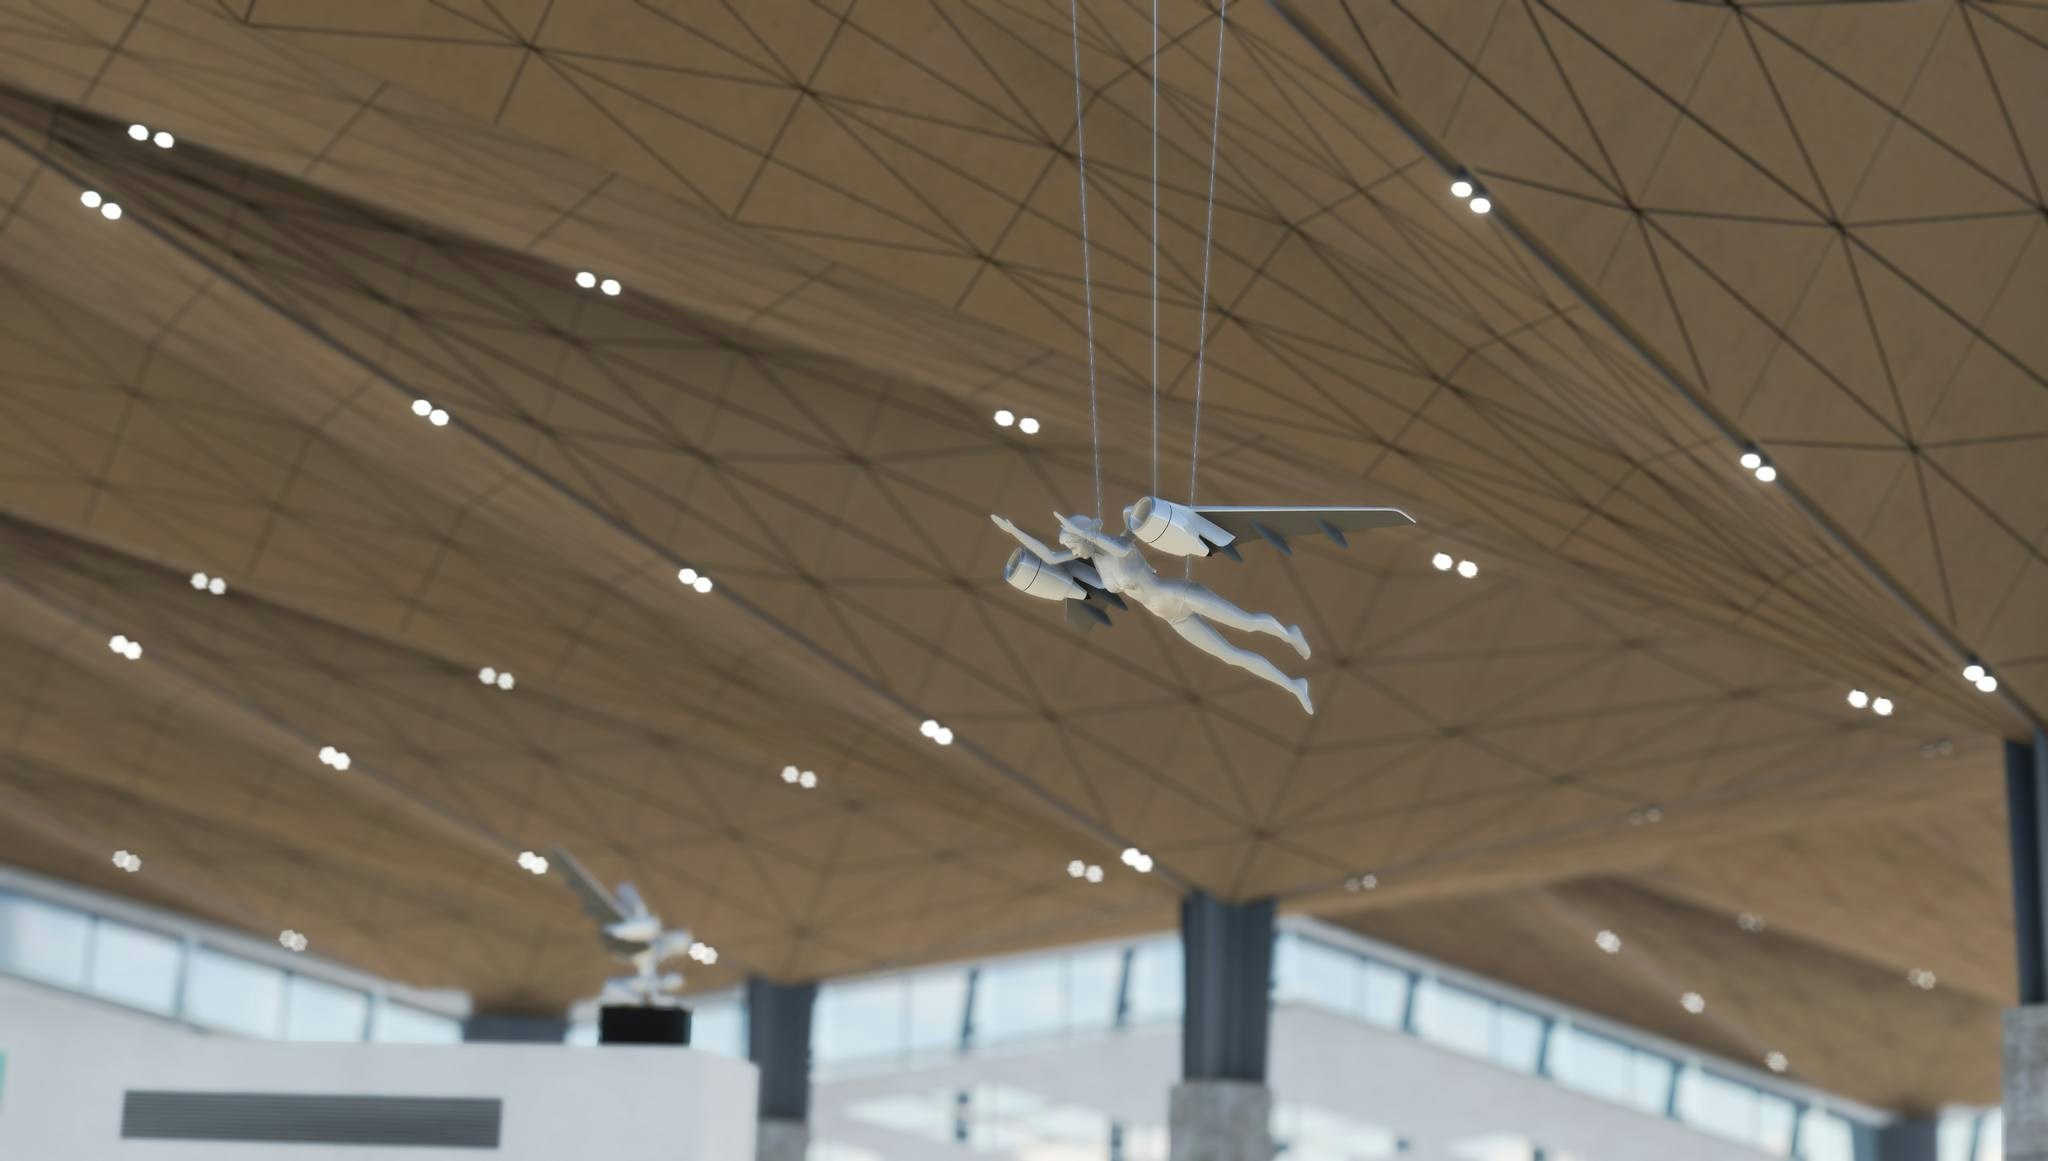 Digital Designs Provides Airport Saint-Petersburg Pulkovo ULLI Previews